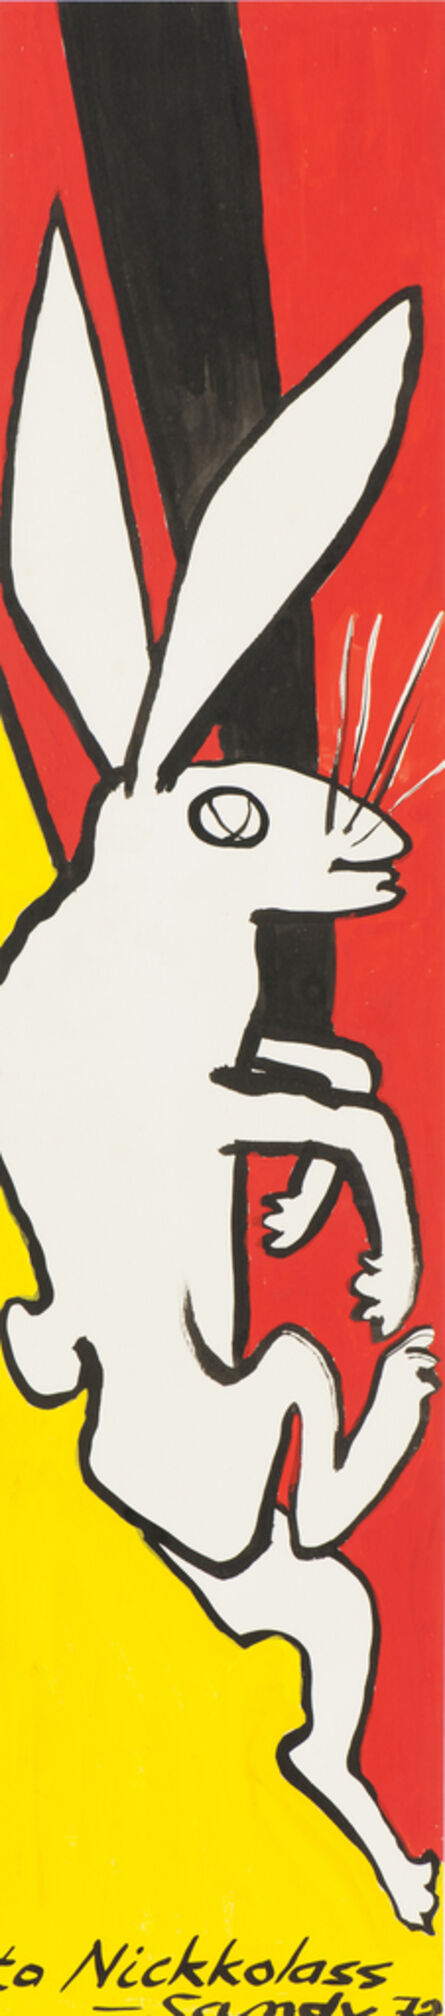 Alexander Calder, ‘Jack Rabbit’, 1969